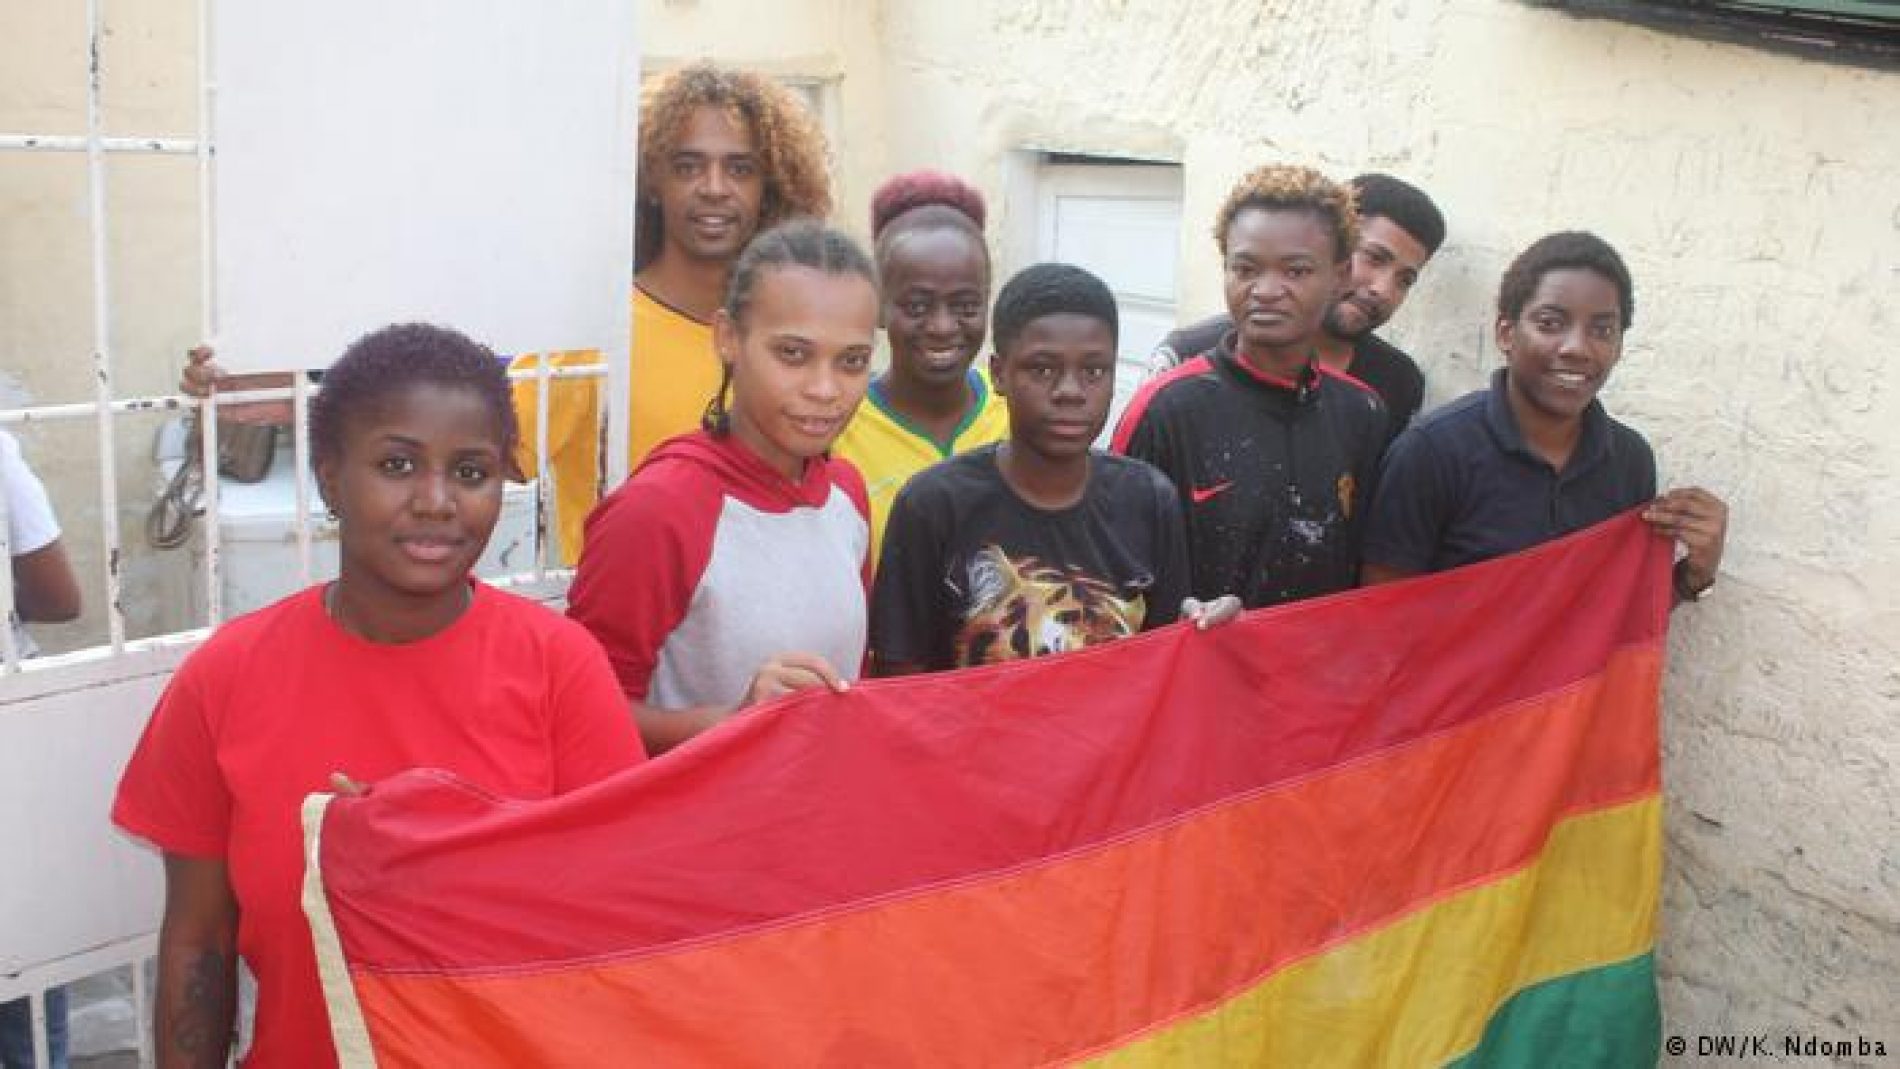 Angola Decriminalizes Same-Sex Conduct, Also Criminalizes Discrimination Based On Sexual Orientation